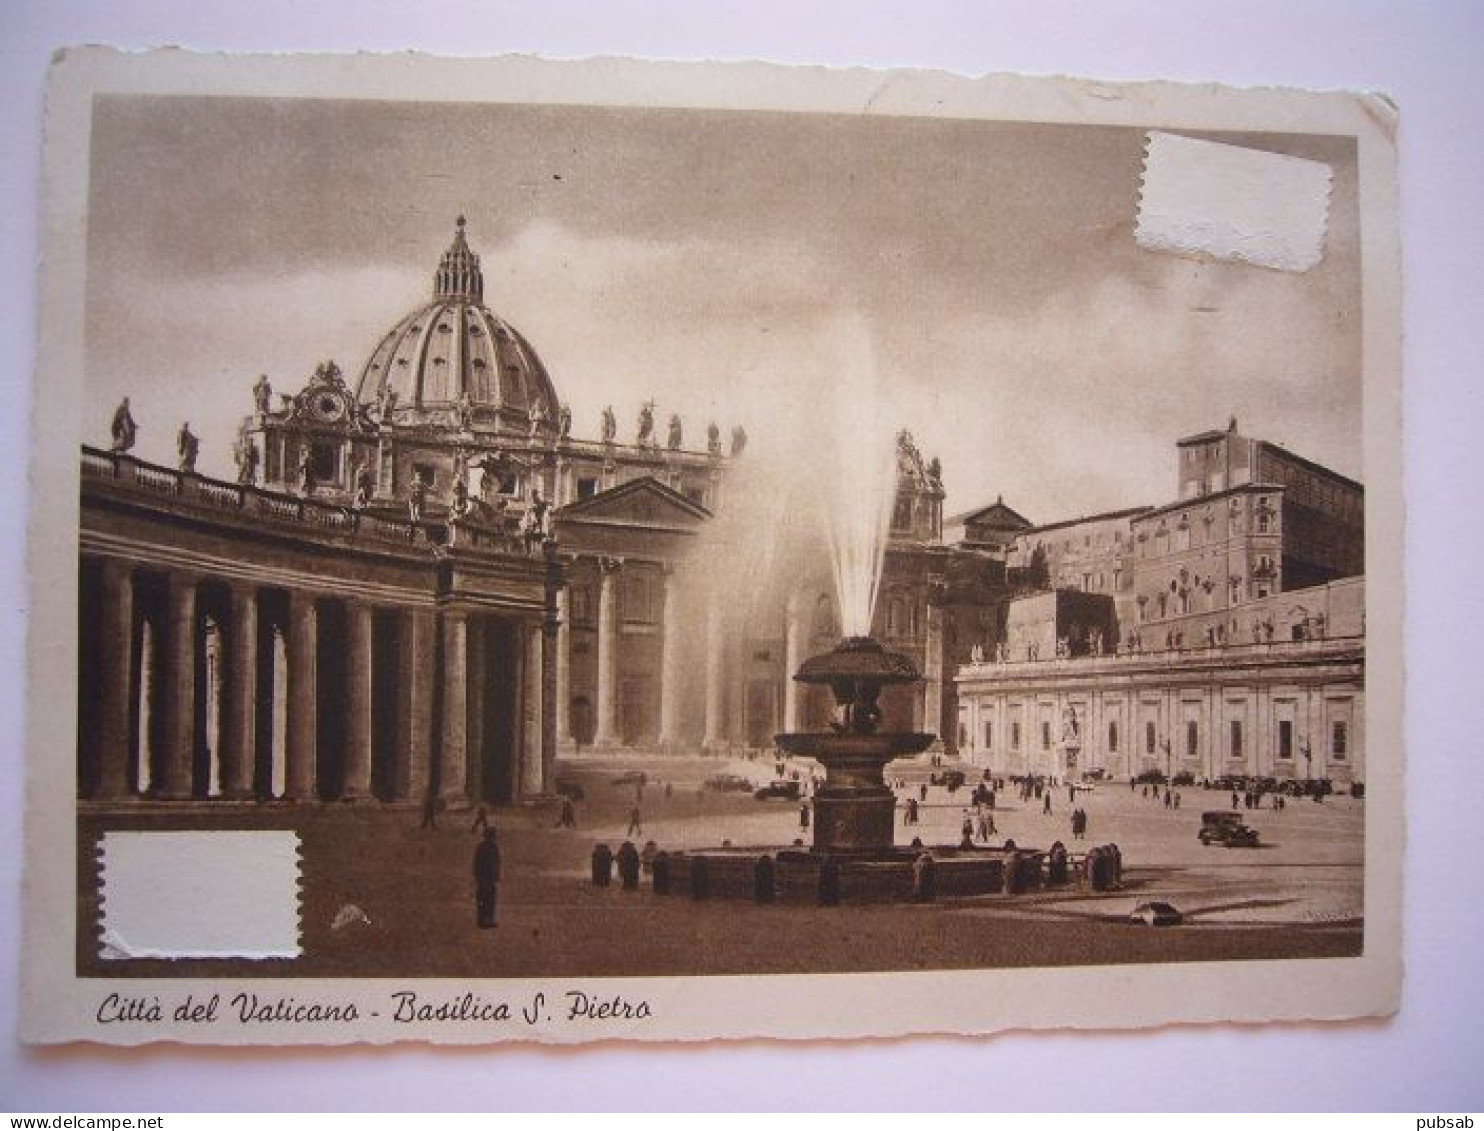 Avion / Airplane / CITTA DEL VATICANO / Flight From Vatican City To Berlin / Jul 4, 1938 - 1919-1938: Fra Le Due Guerre